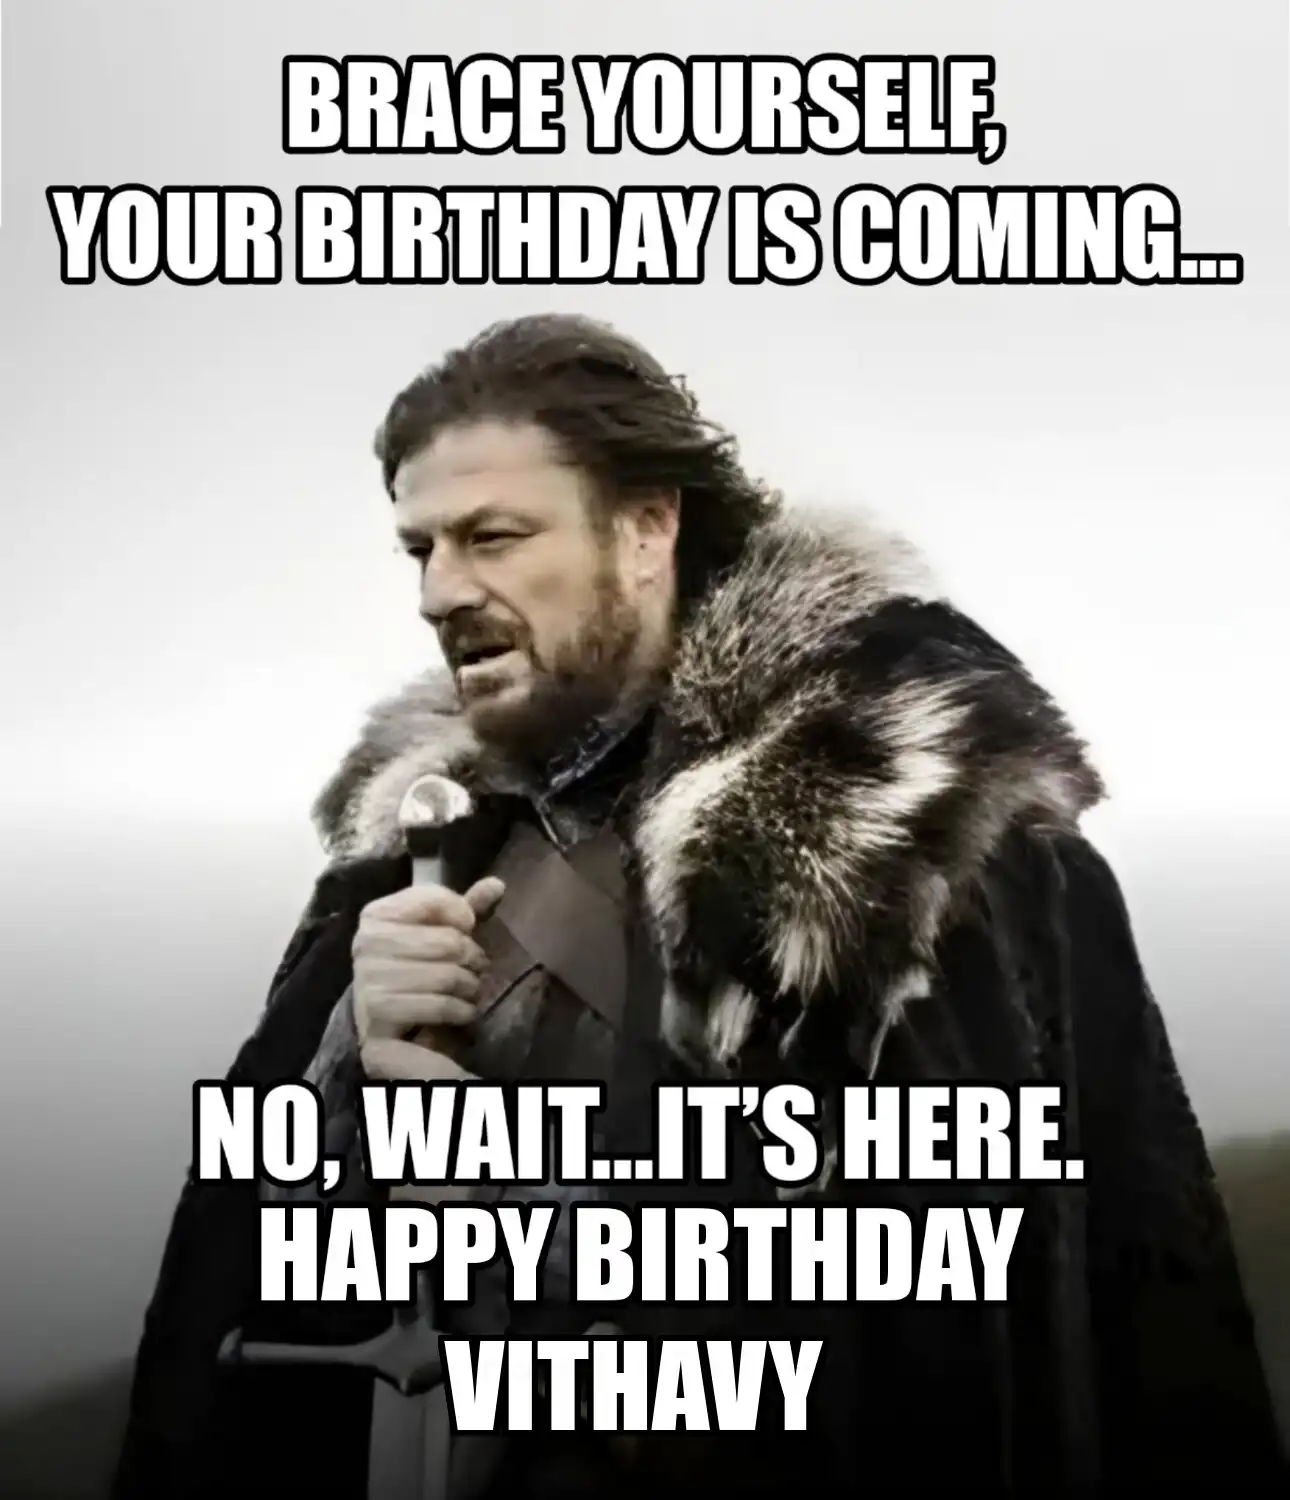 Happy Birthday Vithavy Brace Yourself Your Birthday Is Coming Meme